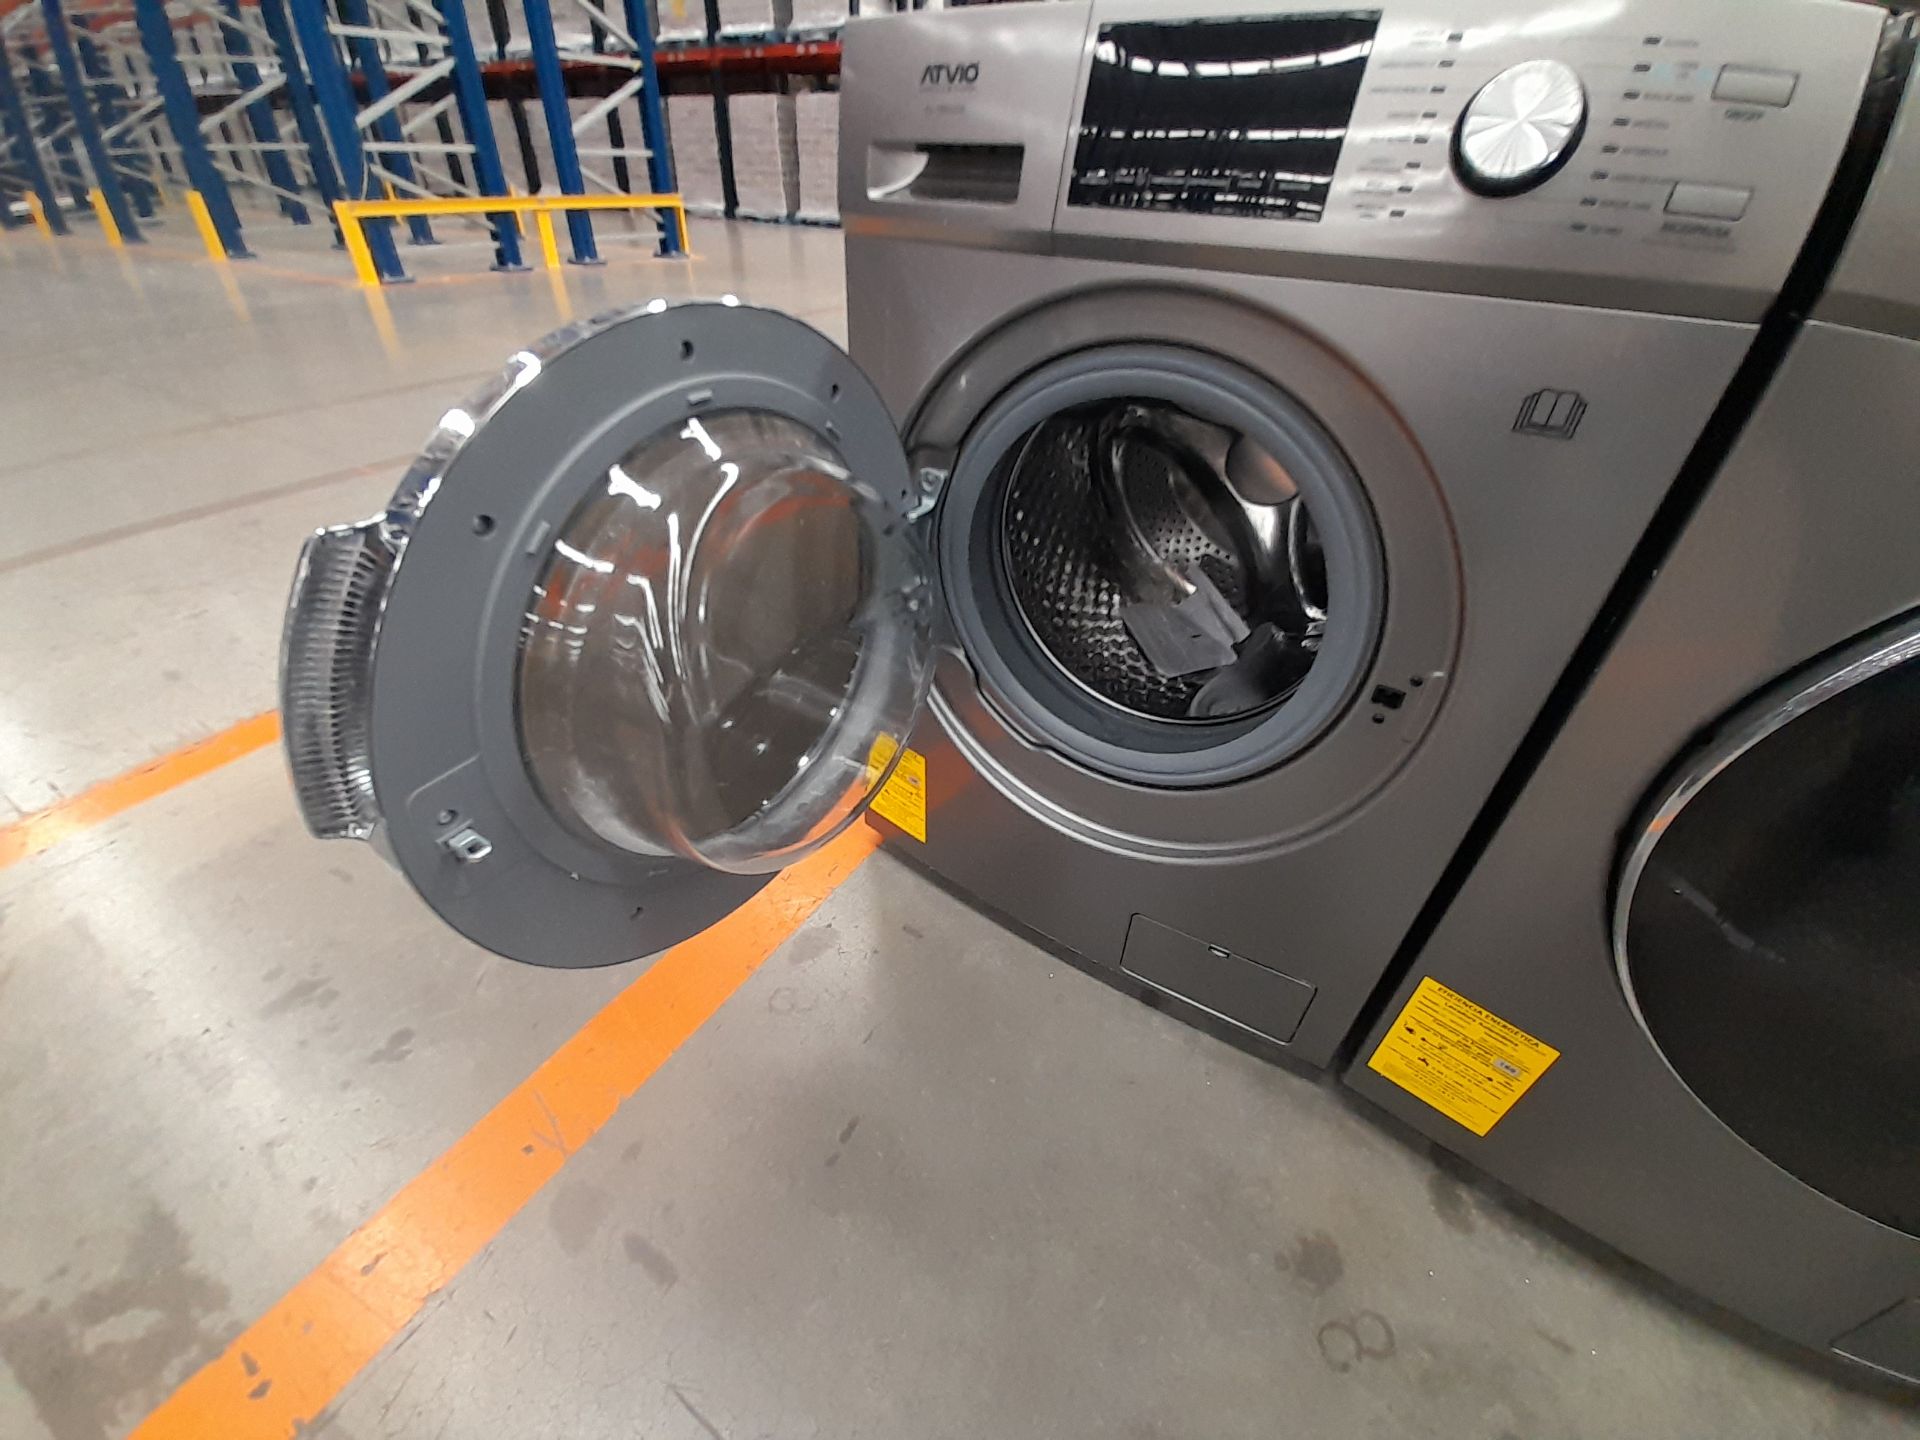 Lote de 2 lavadoras contiene: 1 lavadora de 15 KG, Marca ATVIO, Modelo FL15KGDS, Serie ND, Color GR - Image 5 of 7